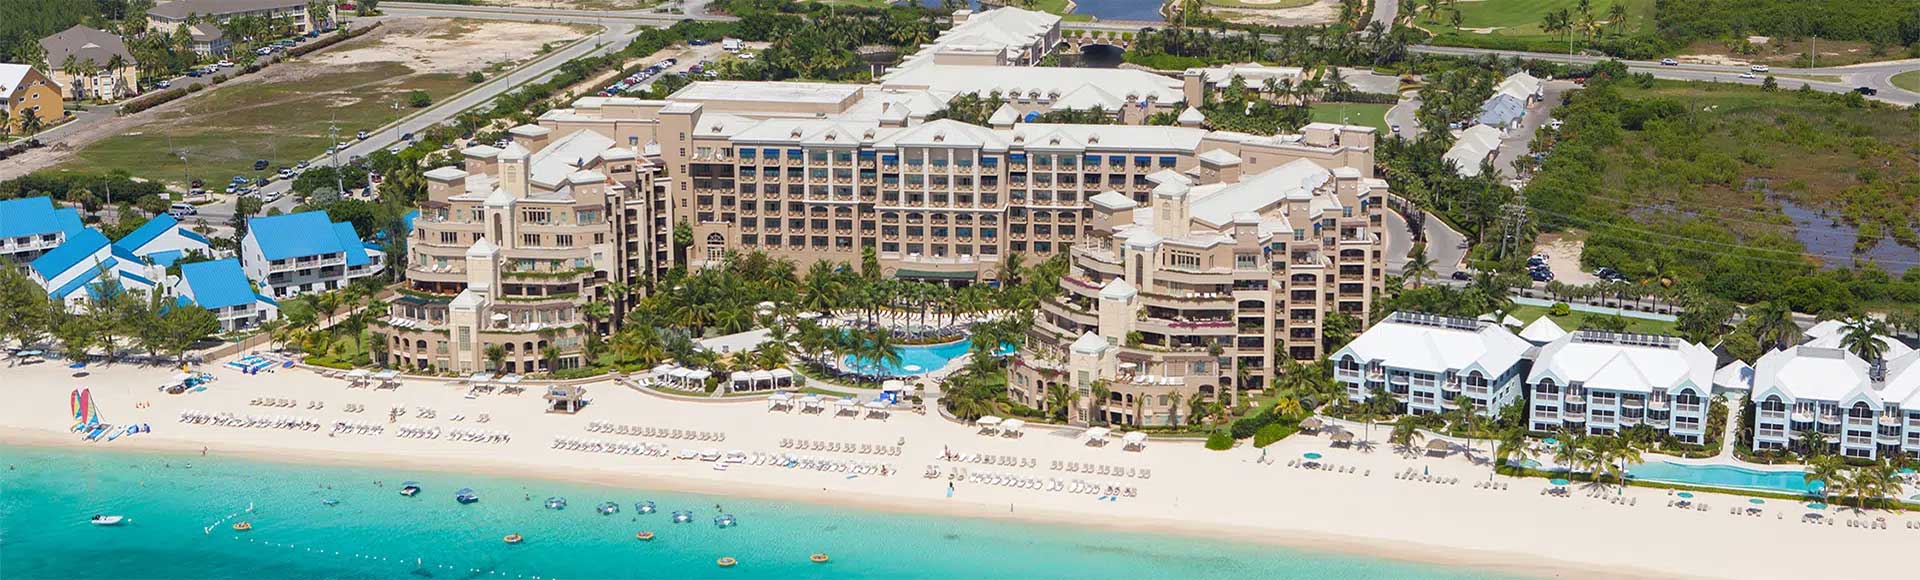 The beachfront at The Ritz-Carlton Grand Cayman